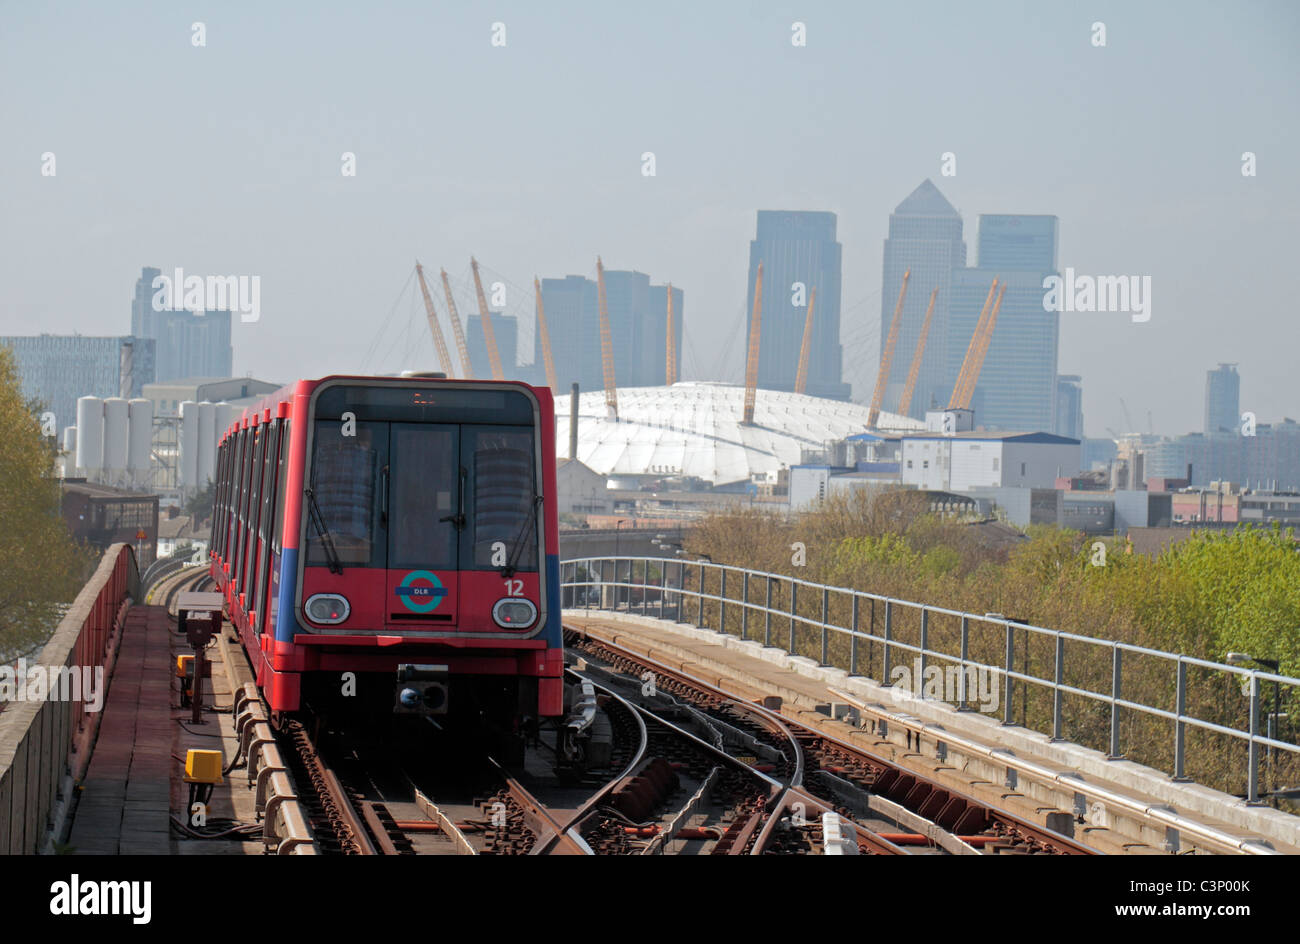 A Docklands Light Railway (DLR) train arriving at Pontoon Dock station, London, UK. Stock Photo